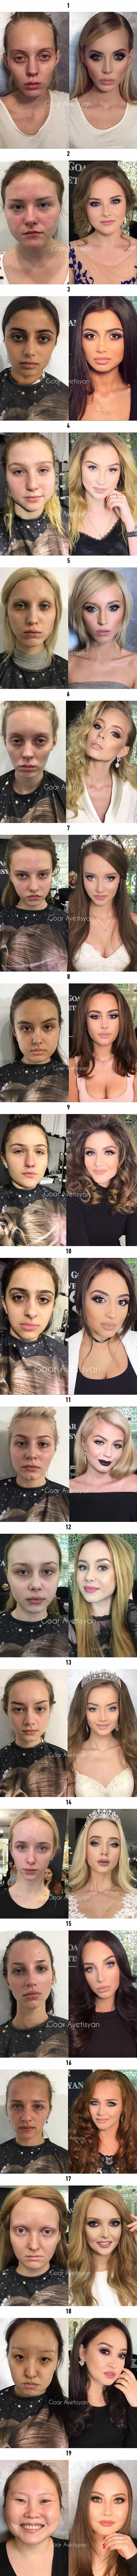 Makeup sorcery